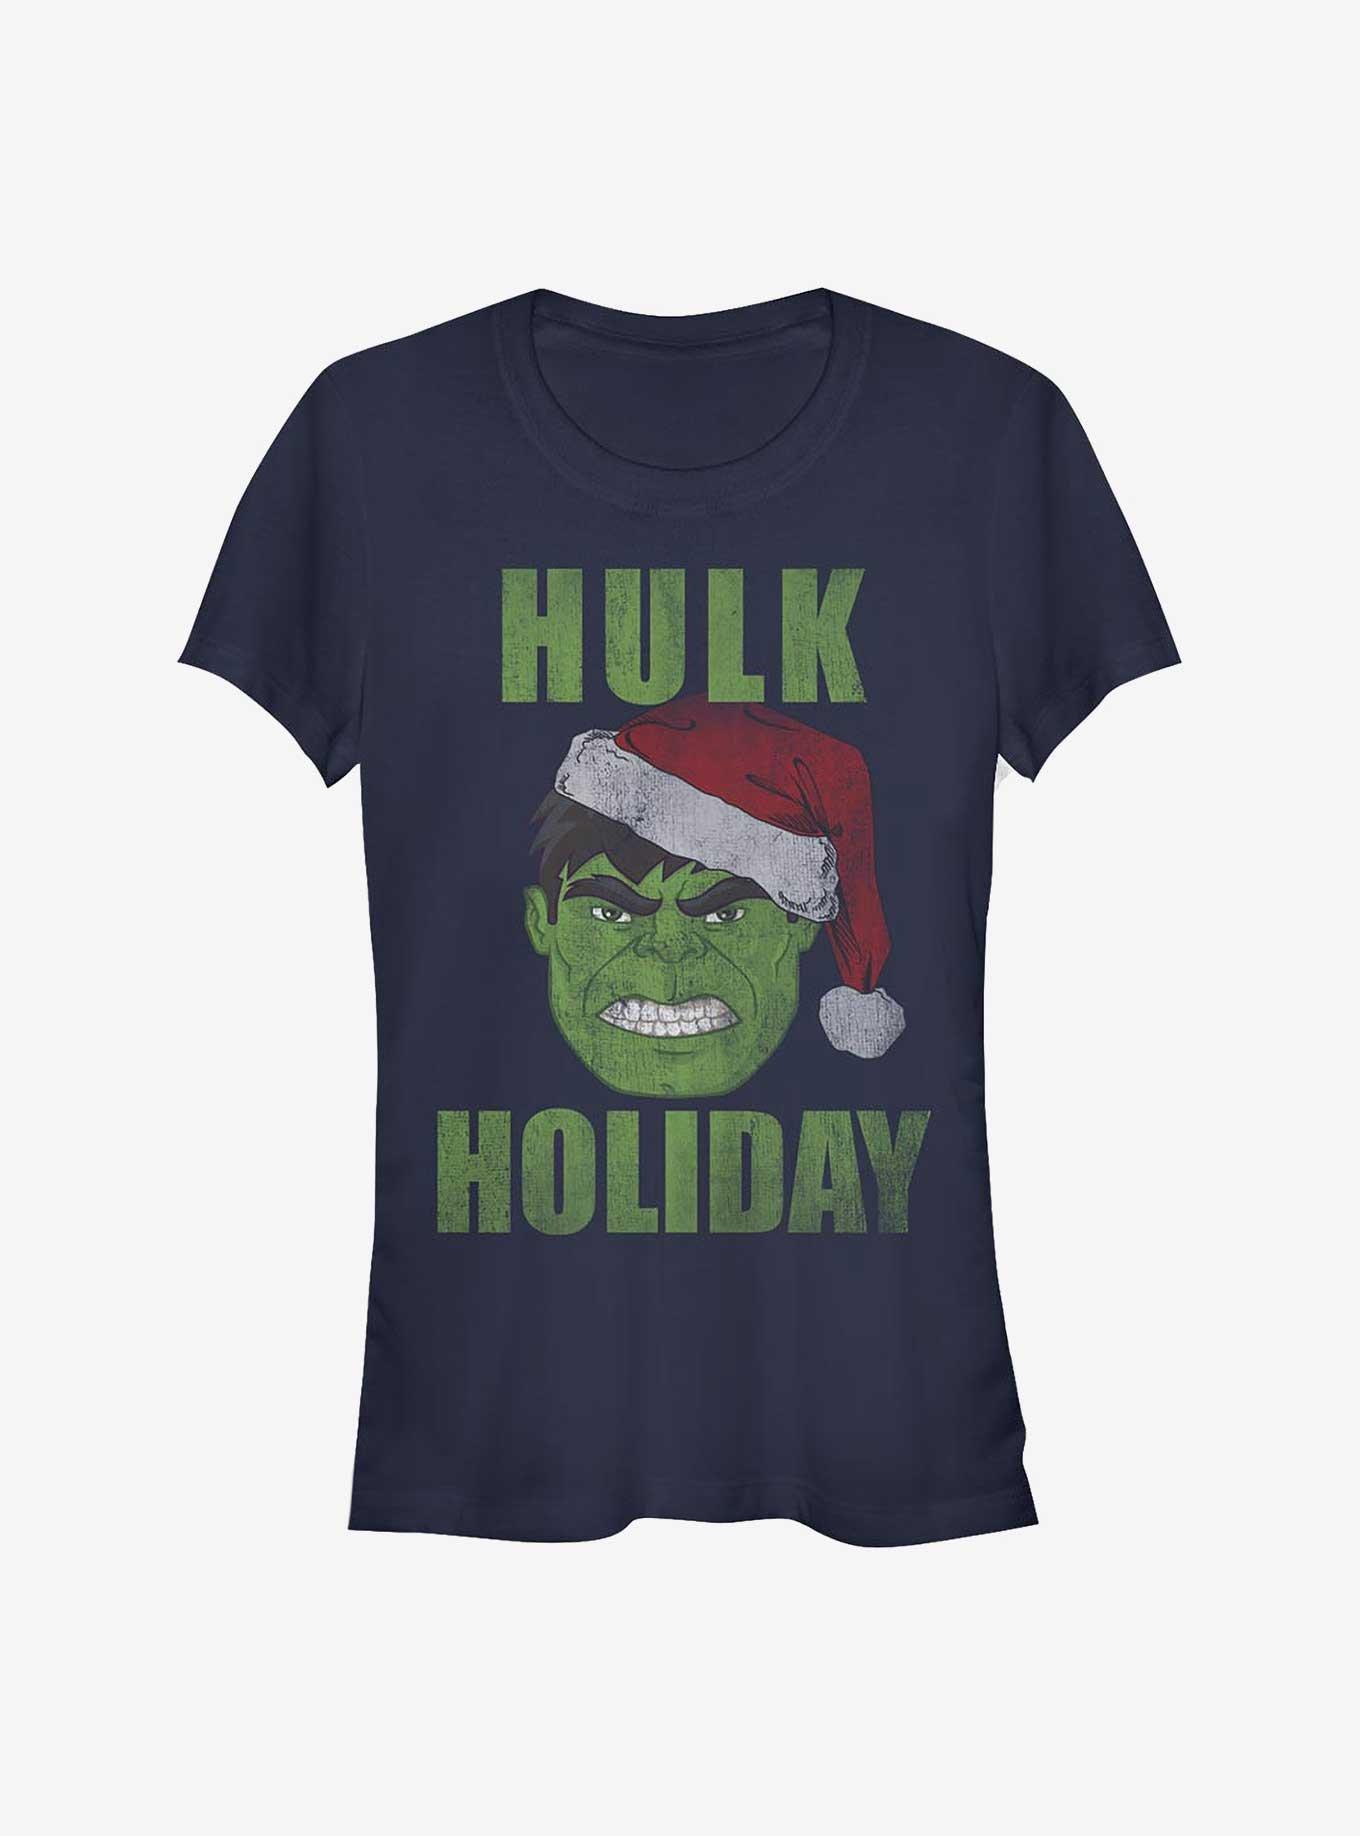 Marvel The Hulk Hulk Holiday Girls T-Shirt, NAVY, hi-res